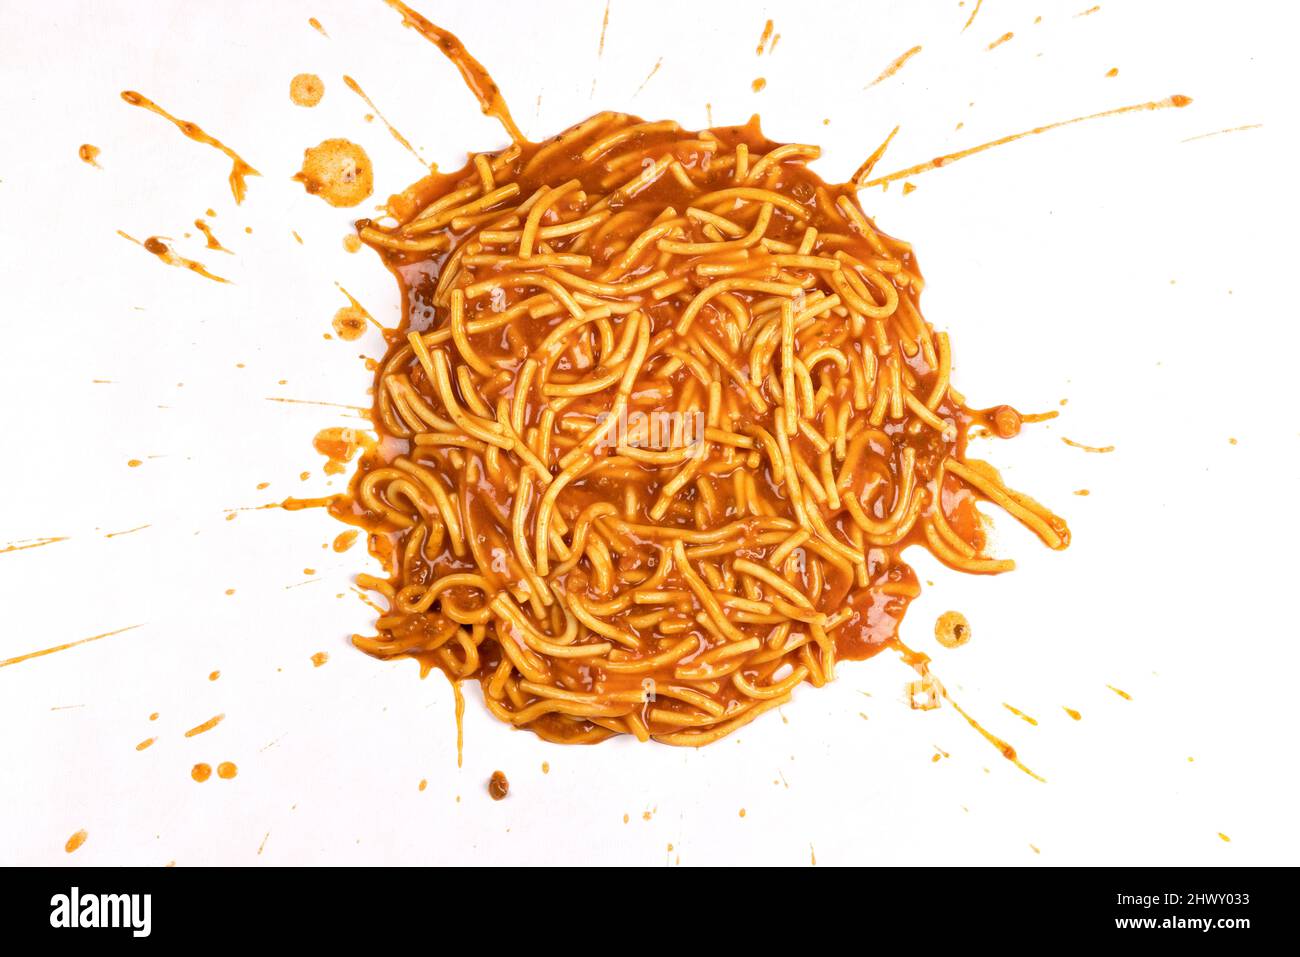 Spaghetti Bolognese splattered on a white background. Stock Photo